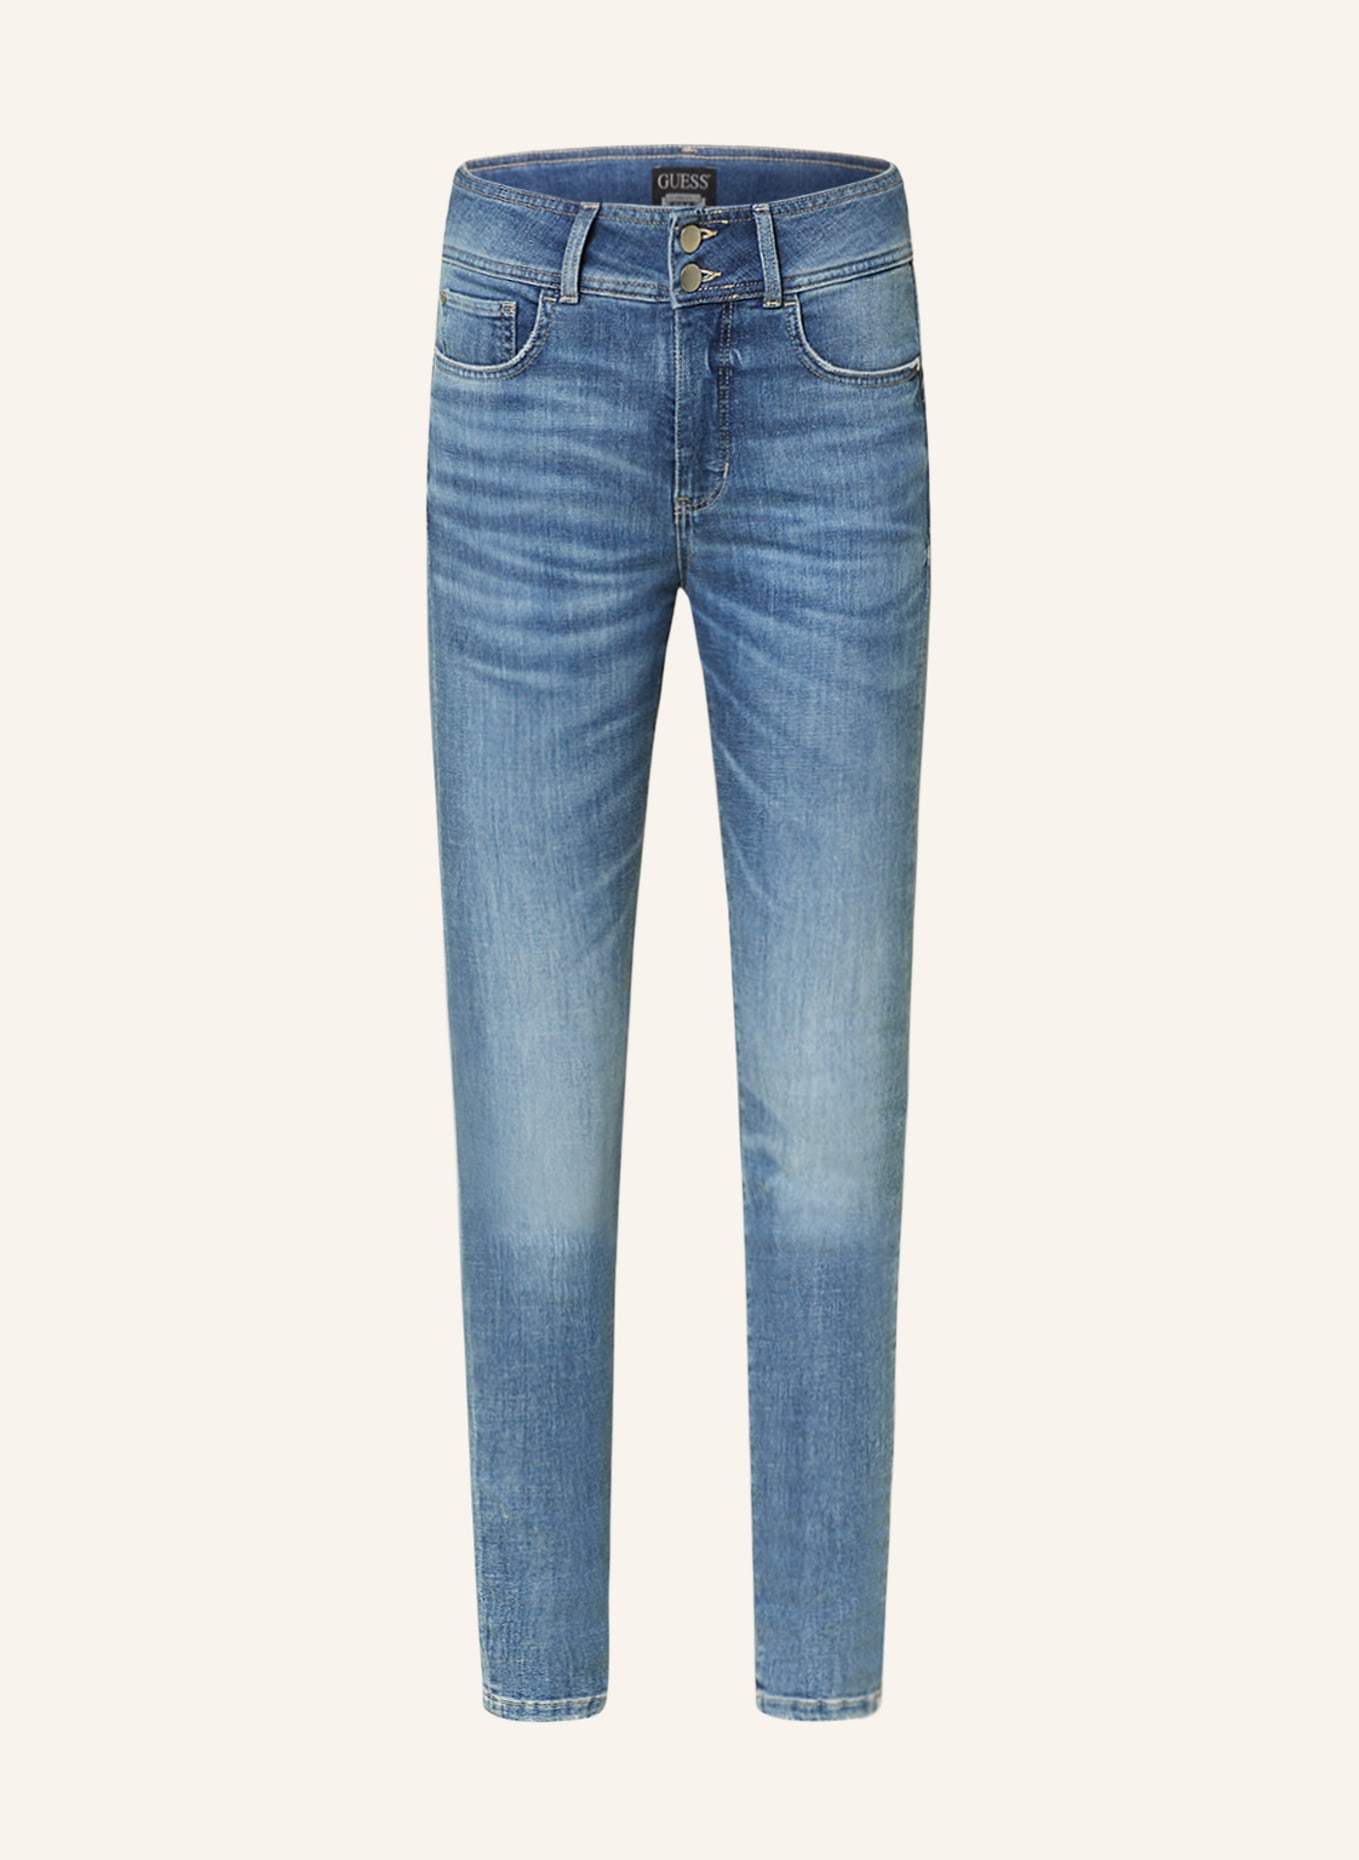 GUESS Skinny Jeans SHAPE UP, Farbe: GOM3 GOREME (Bild 1)